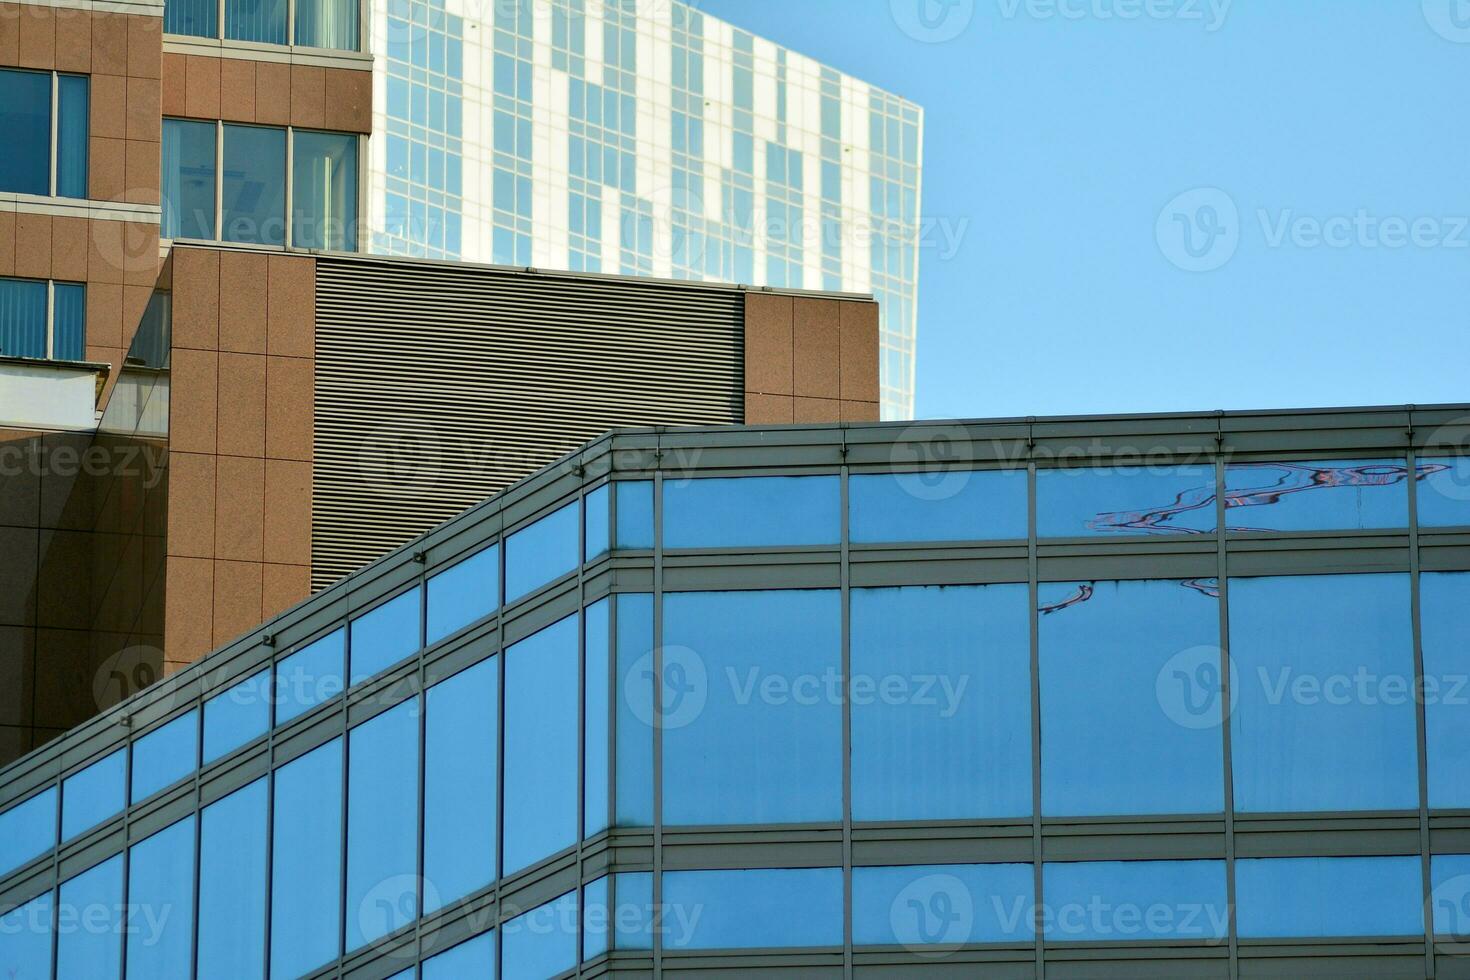 glas gebouw met transparant facade van de gebouw en blauw lucht. structureel glas muur reflecterend blauw lucht. abstract modern architectuur fragment. hedendaags bouwkundig achtergrond. foto